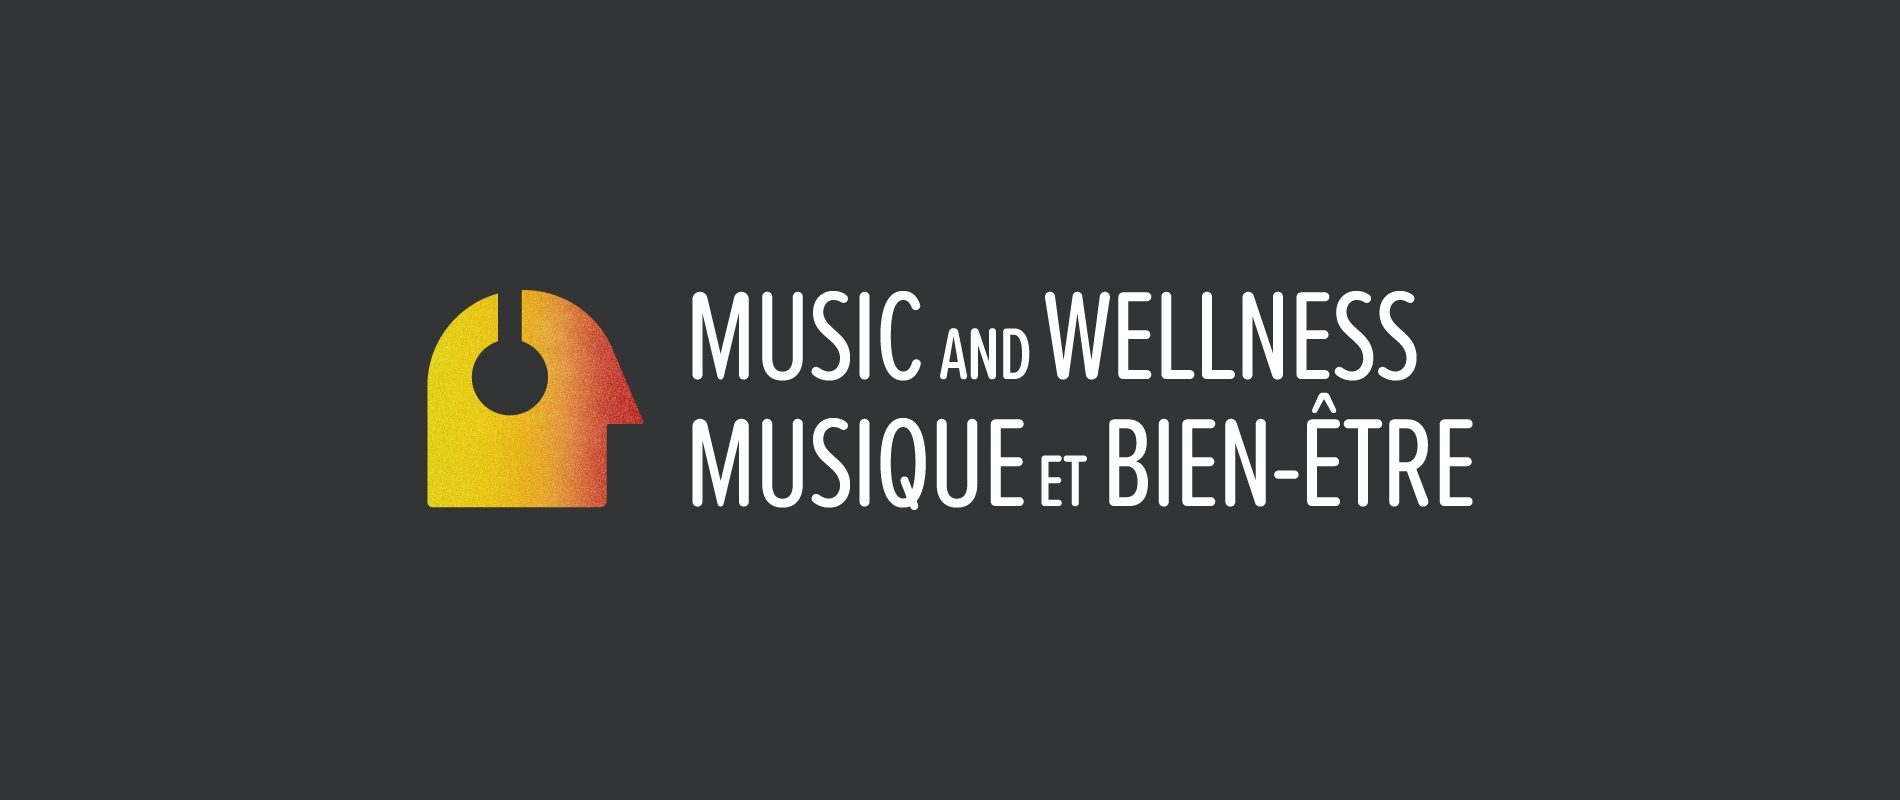 Music & Wellness Exhibition Launch Tickets